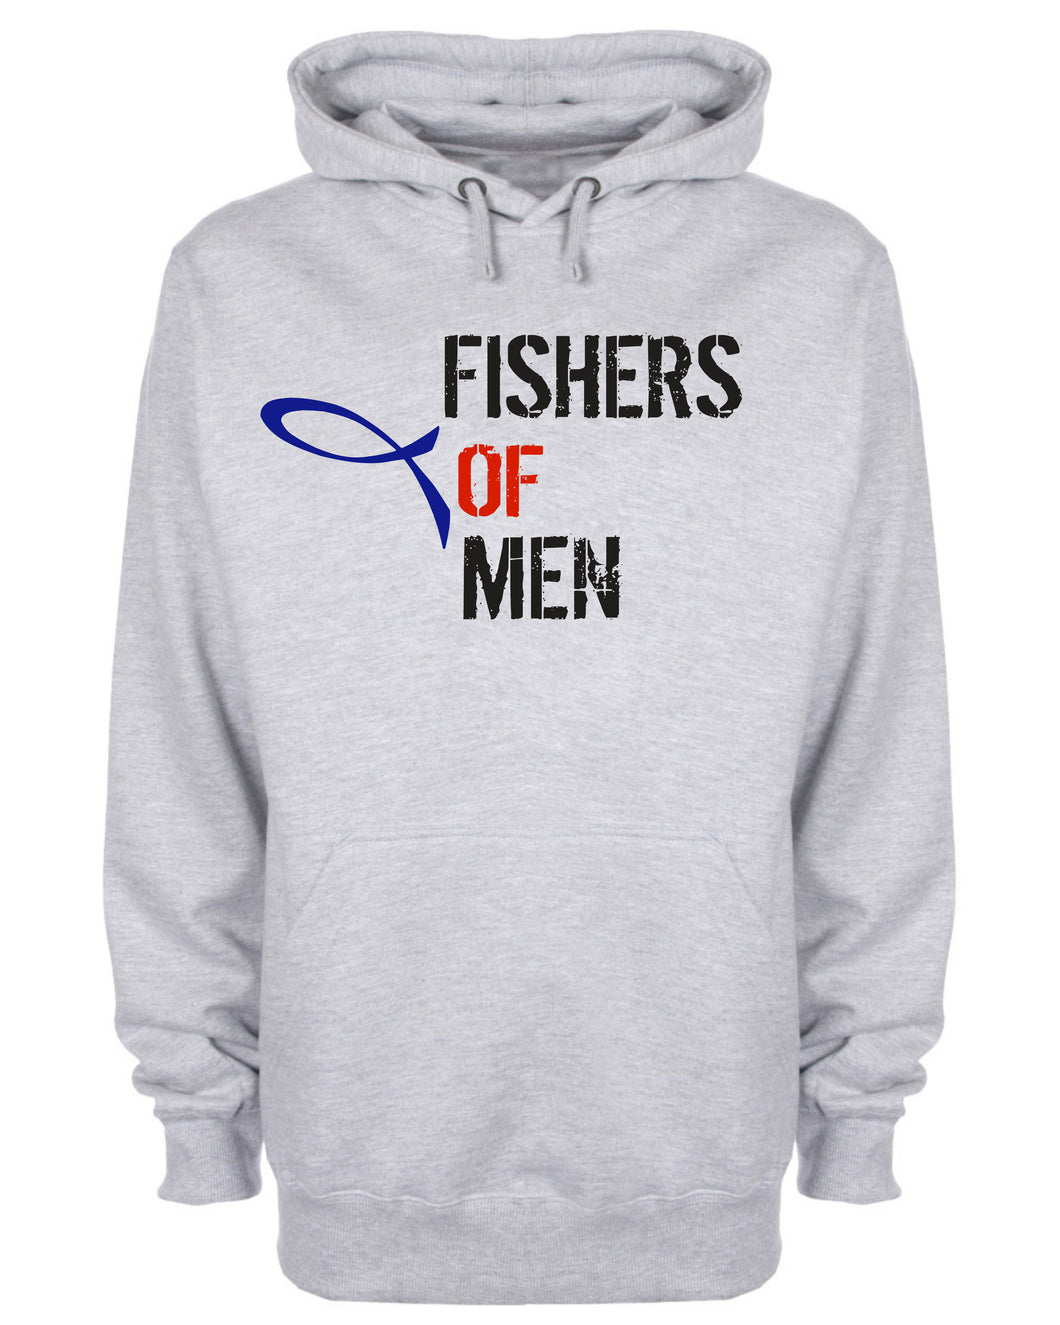 Fishers Of Men Hoodie Christian Sweatshirt